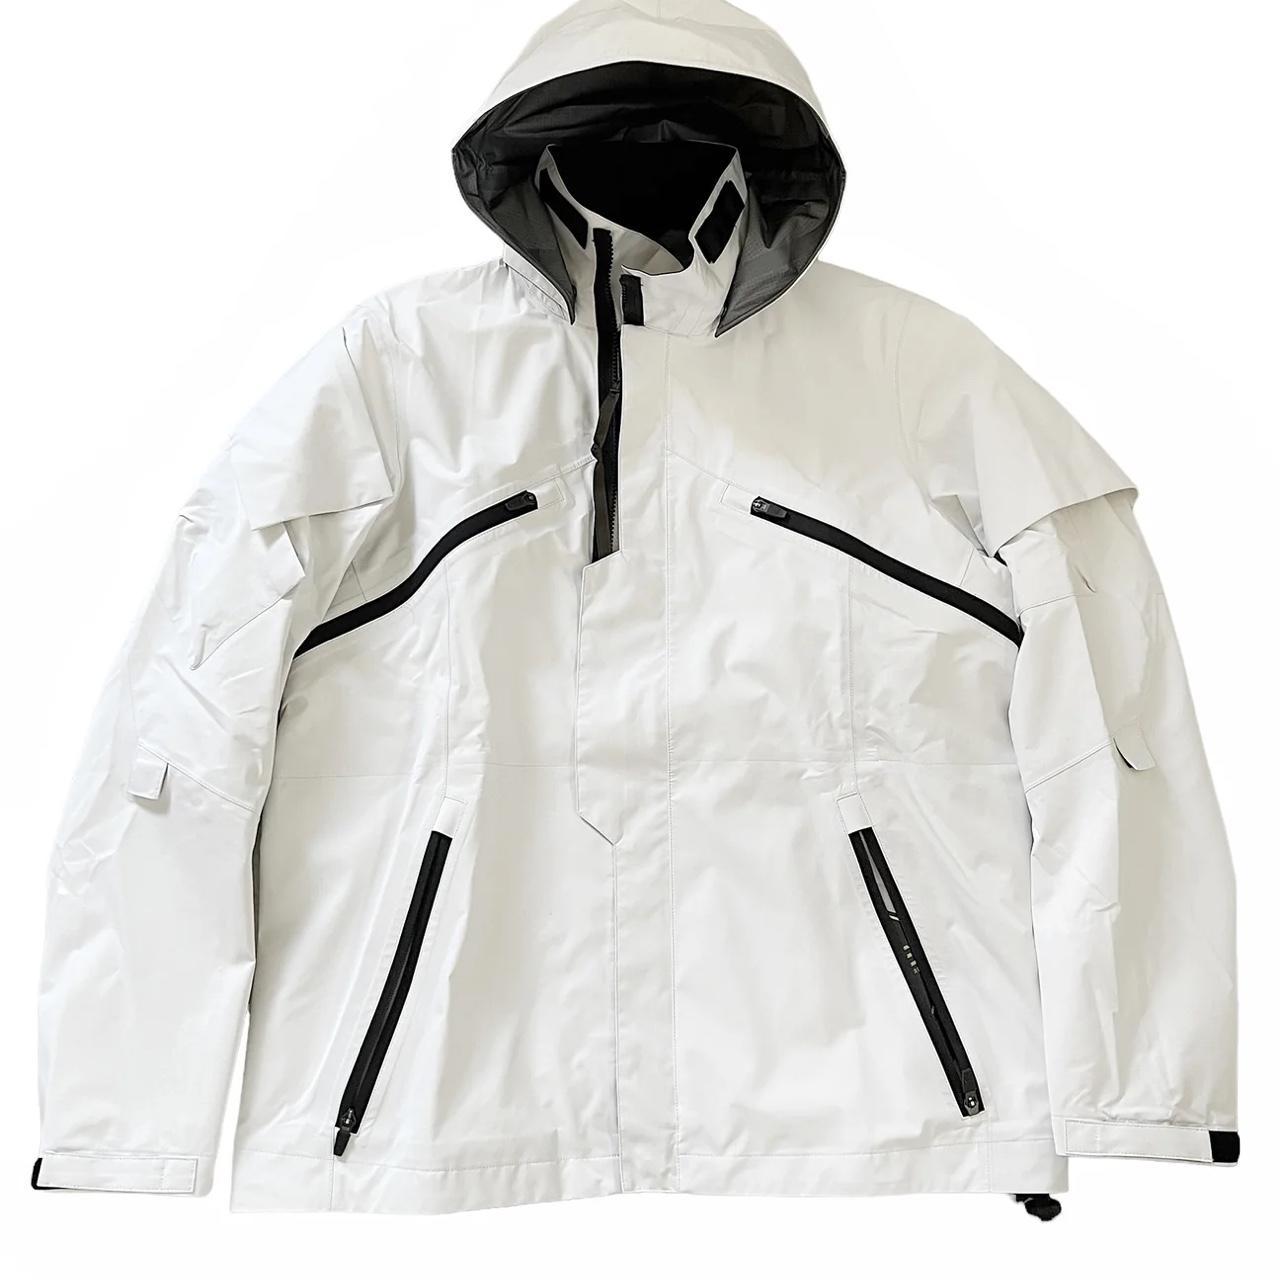 Acronym J1B-GT White Goretex Jacket Marked size:... - Depop